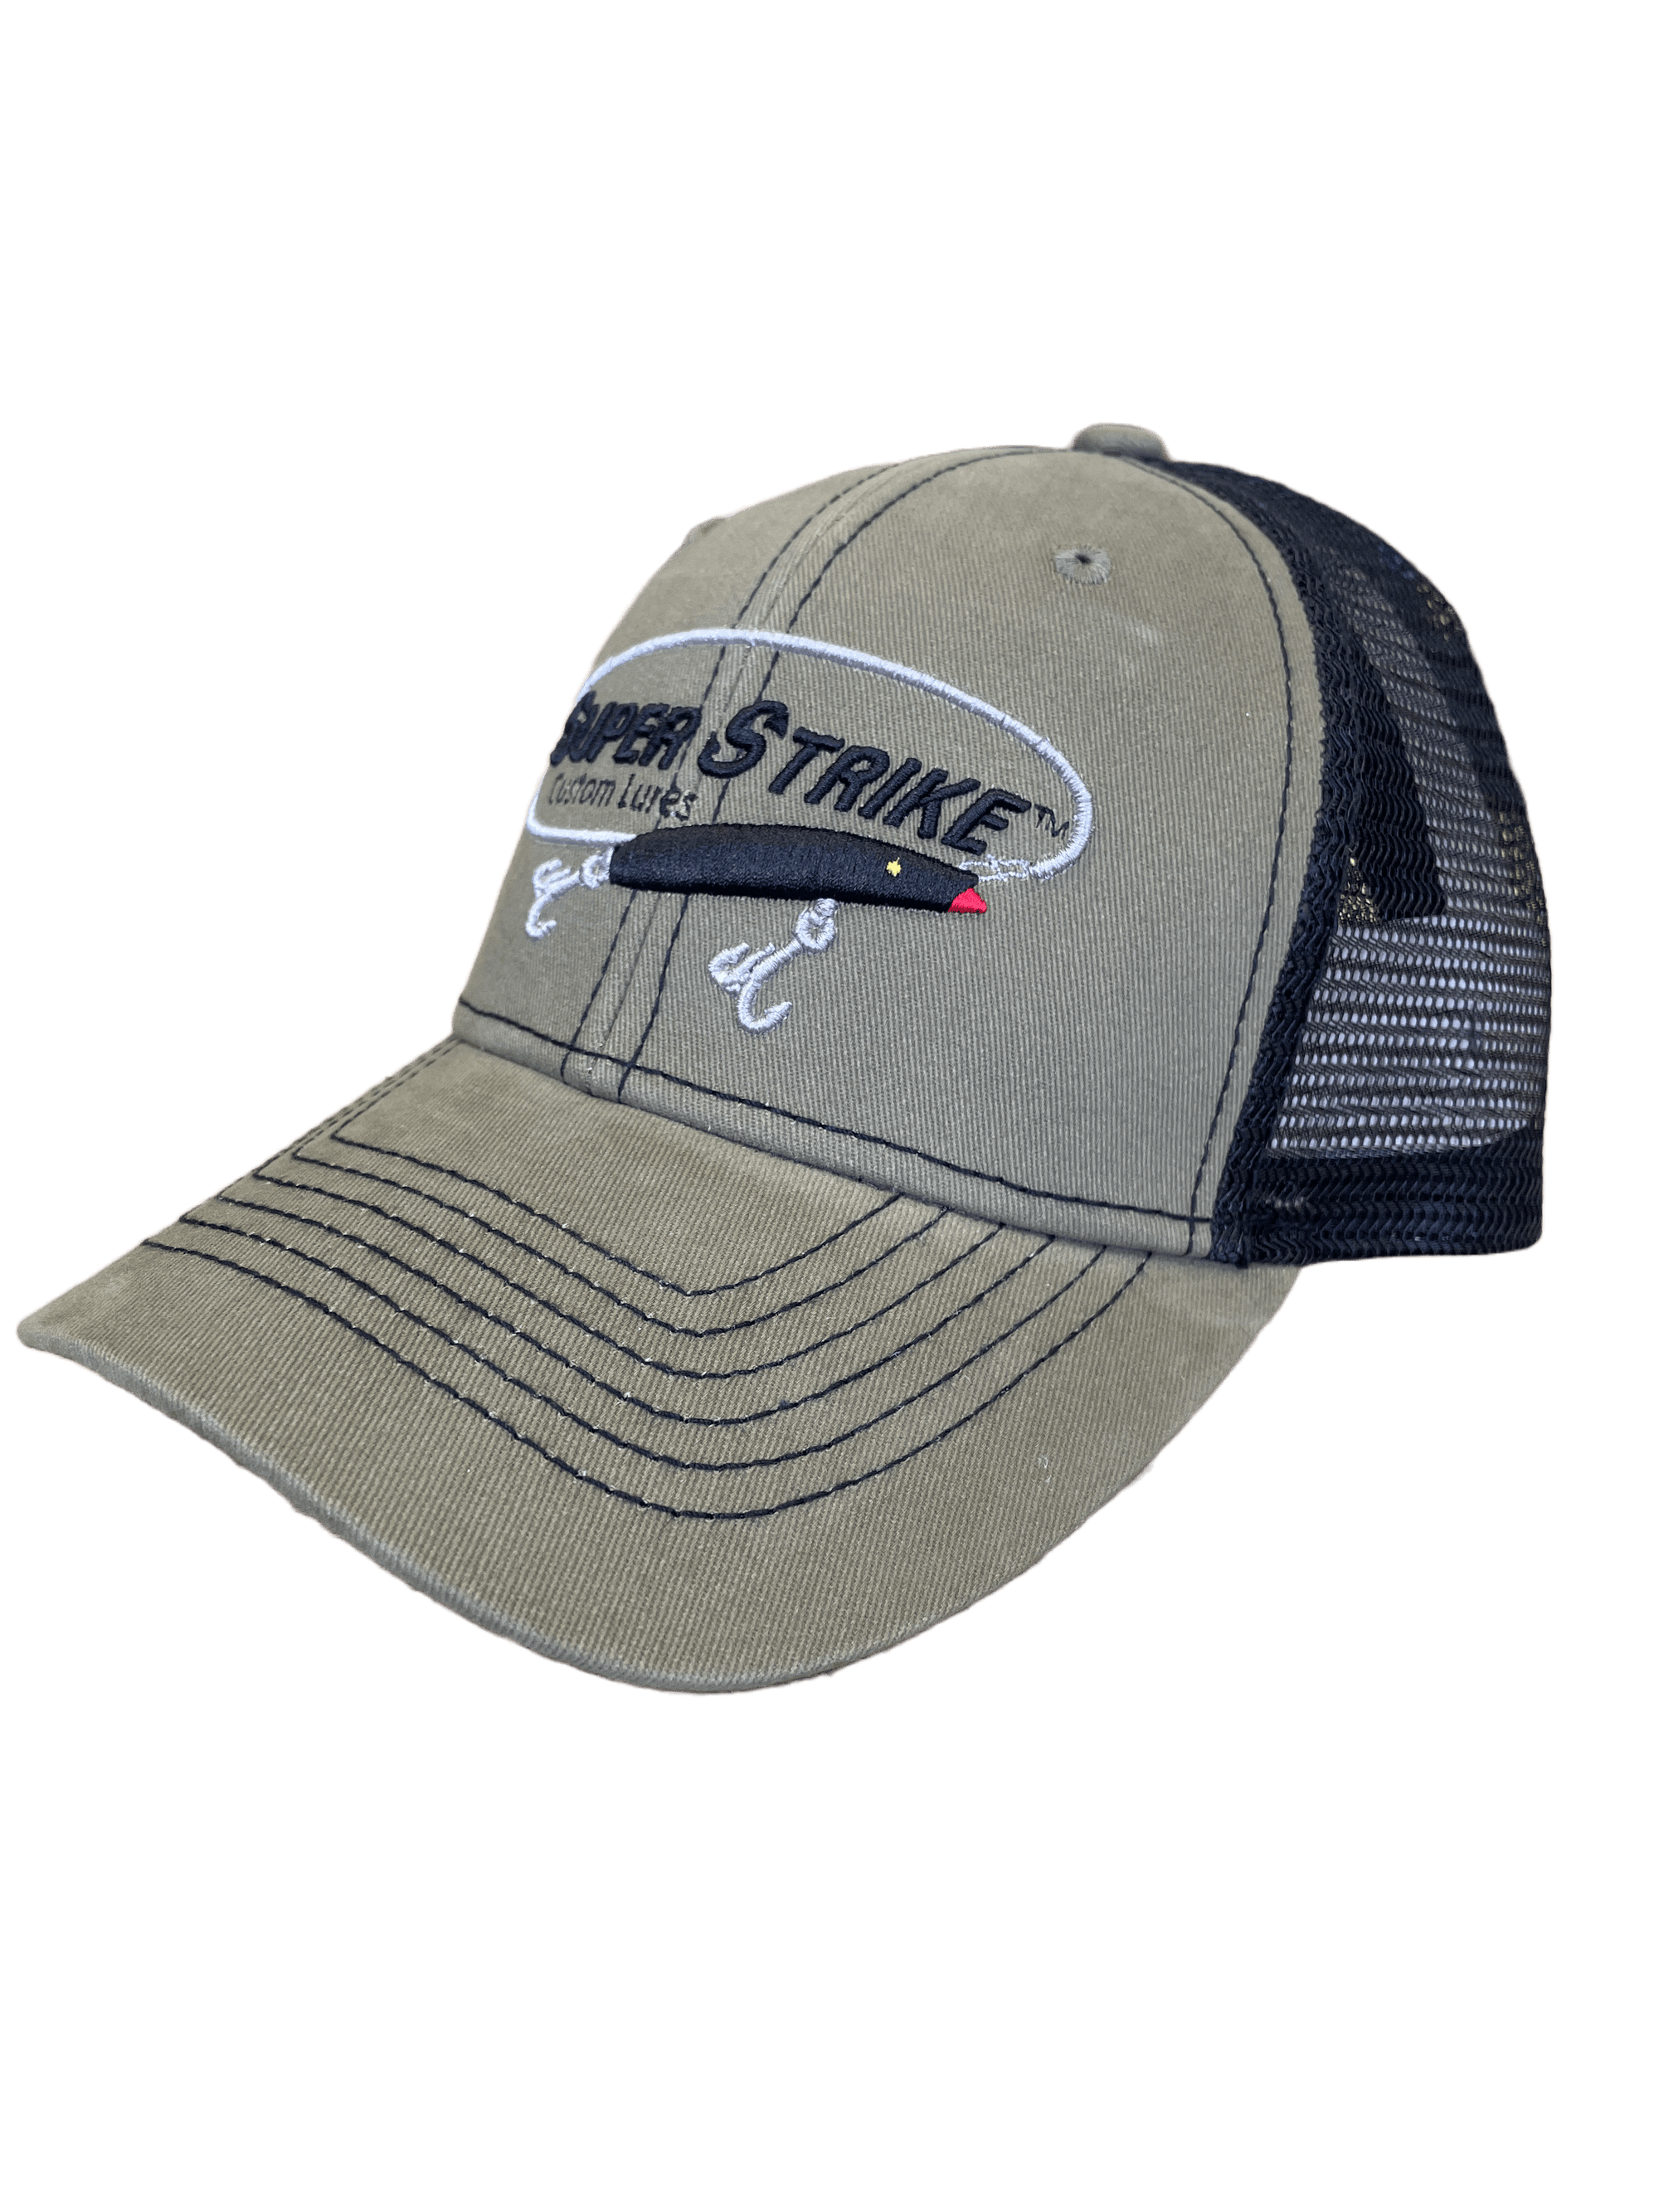 catch fish & chill box logo black classic trucker hat